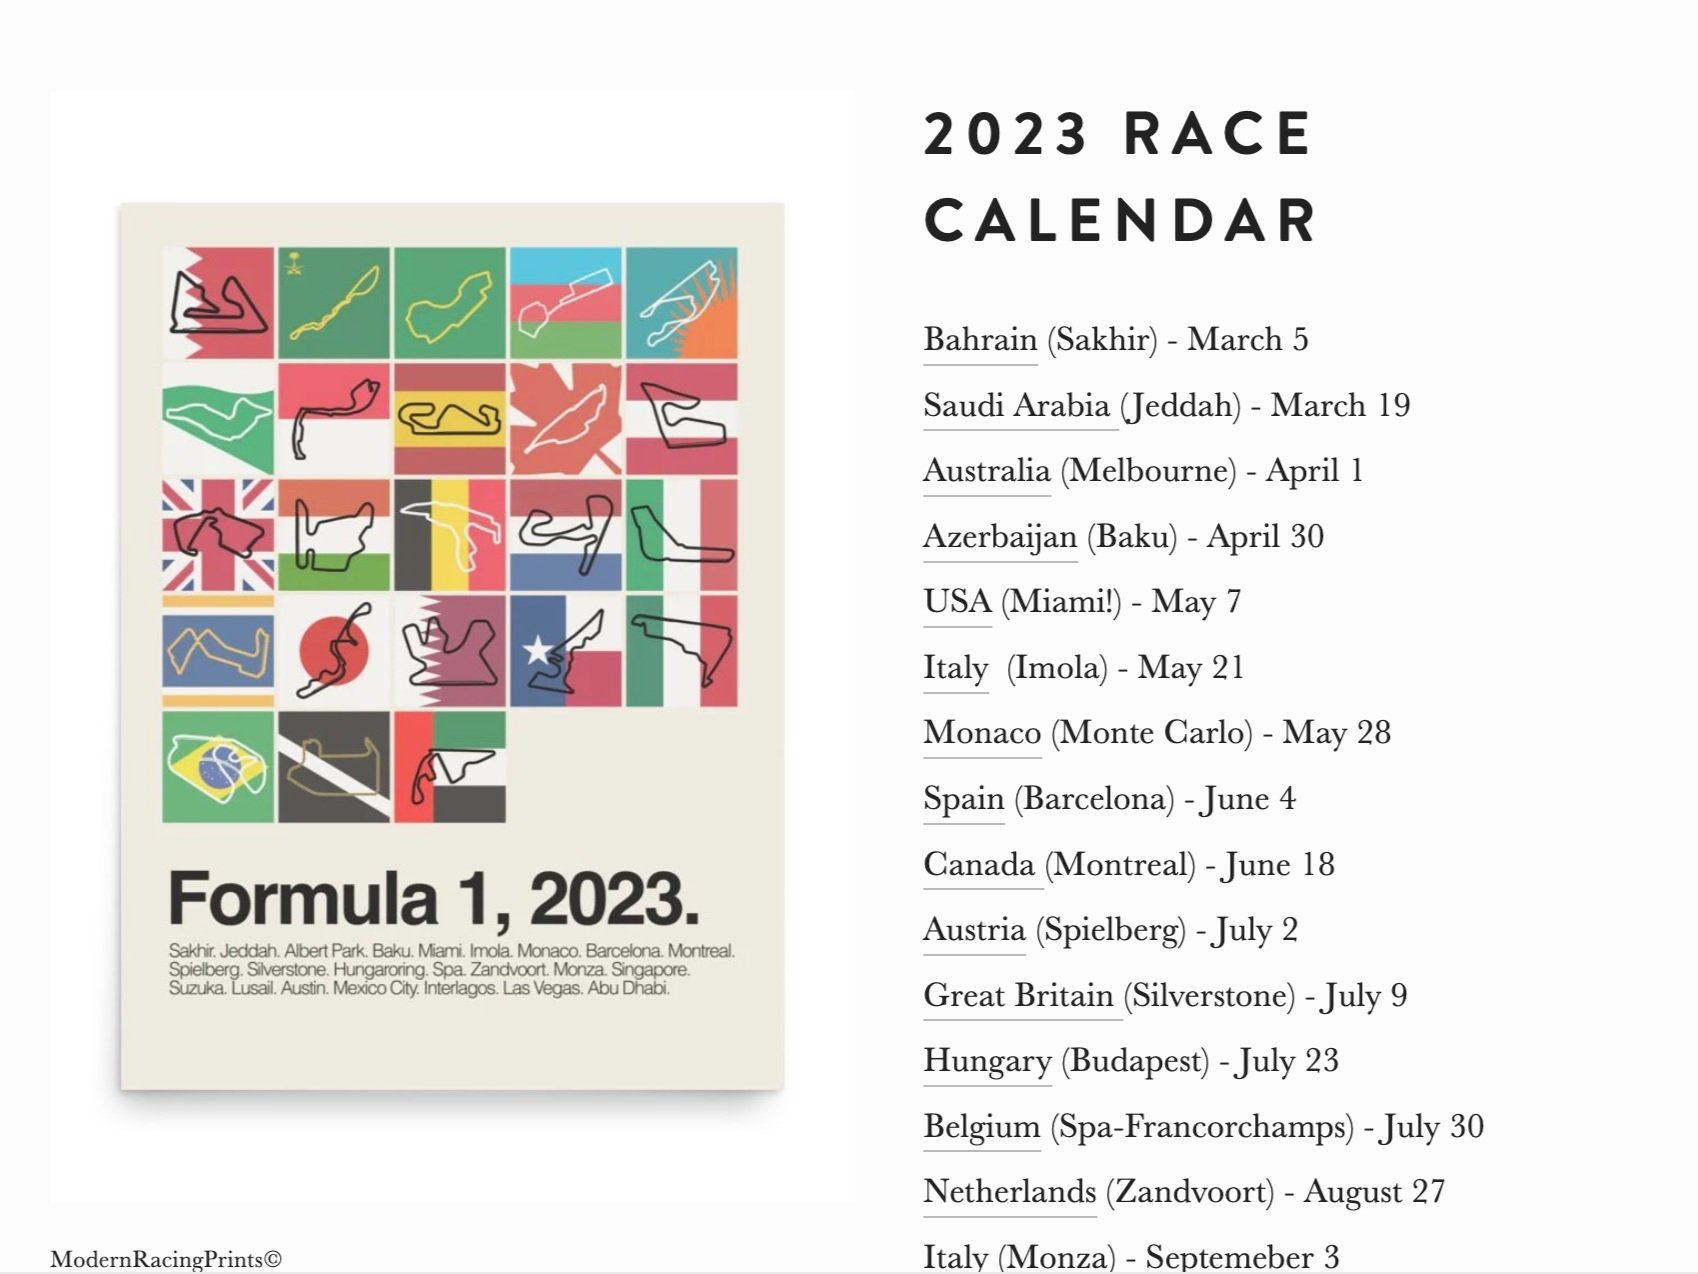 Formula 1 update on the 2023 calendar